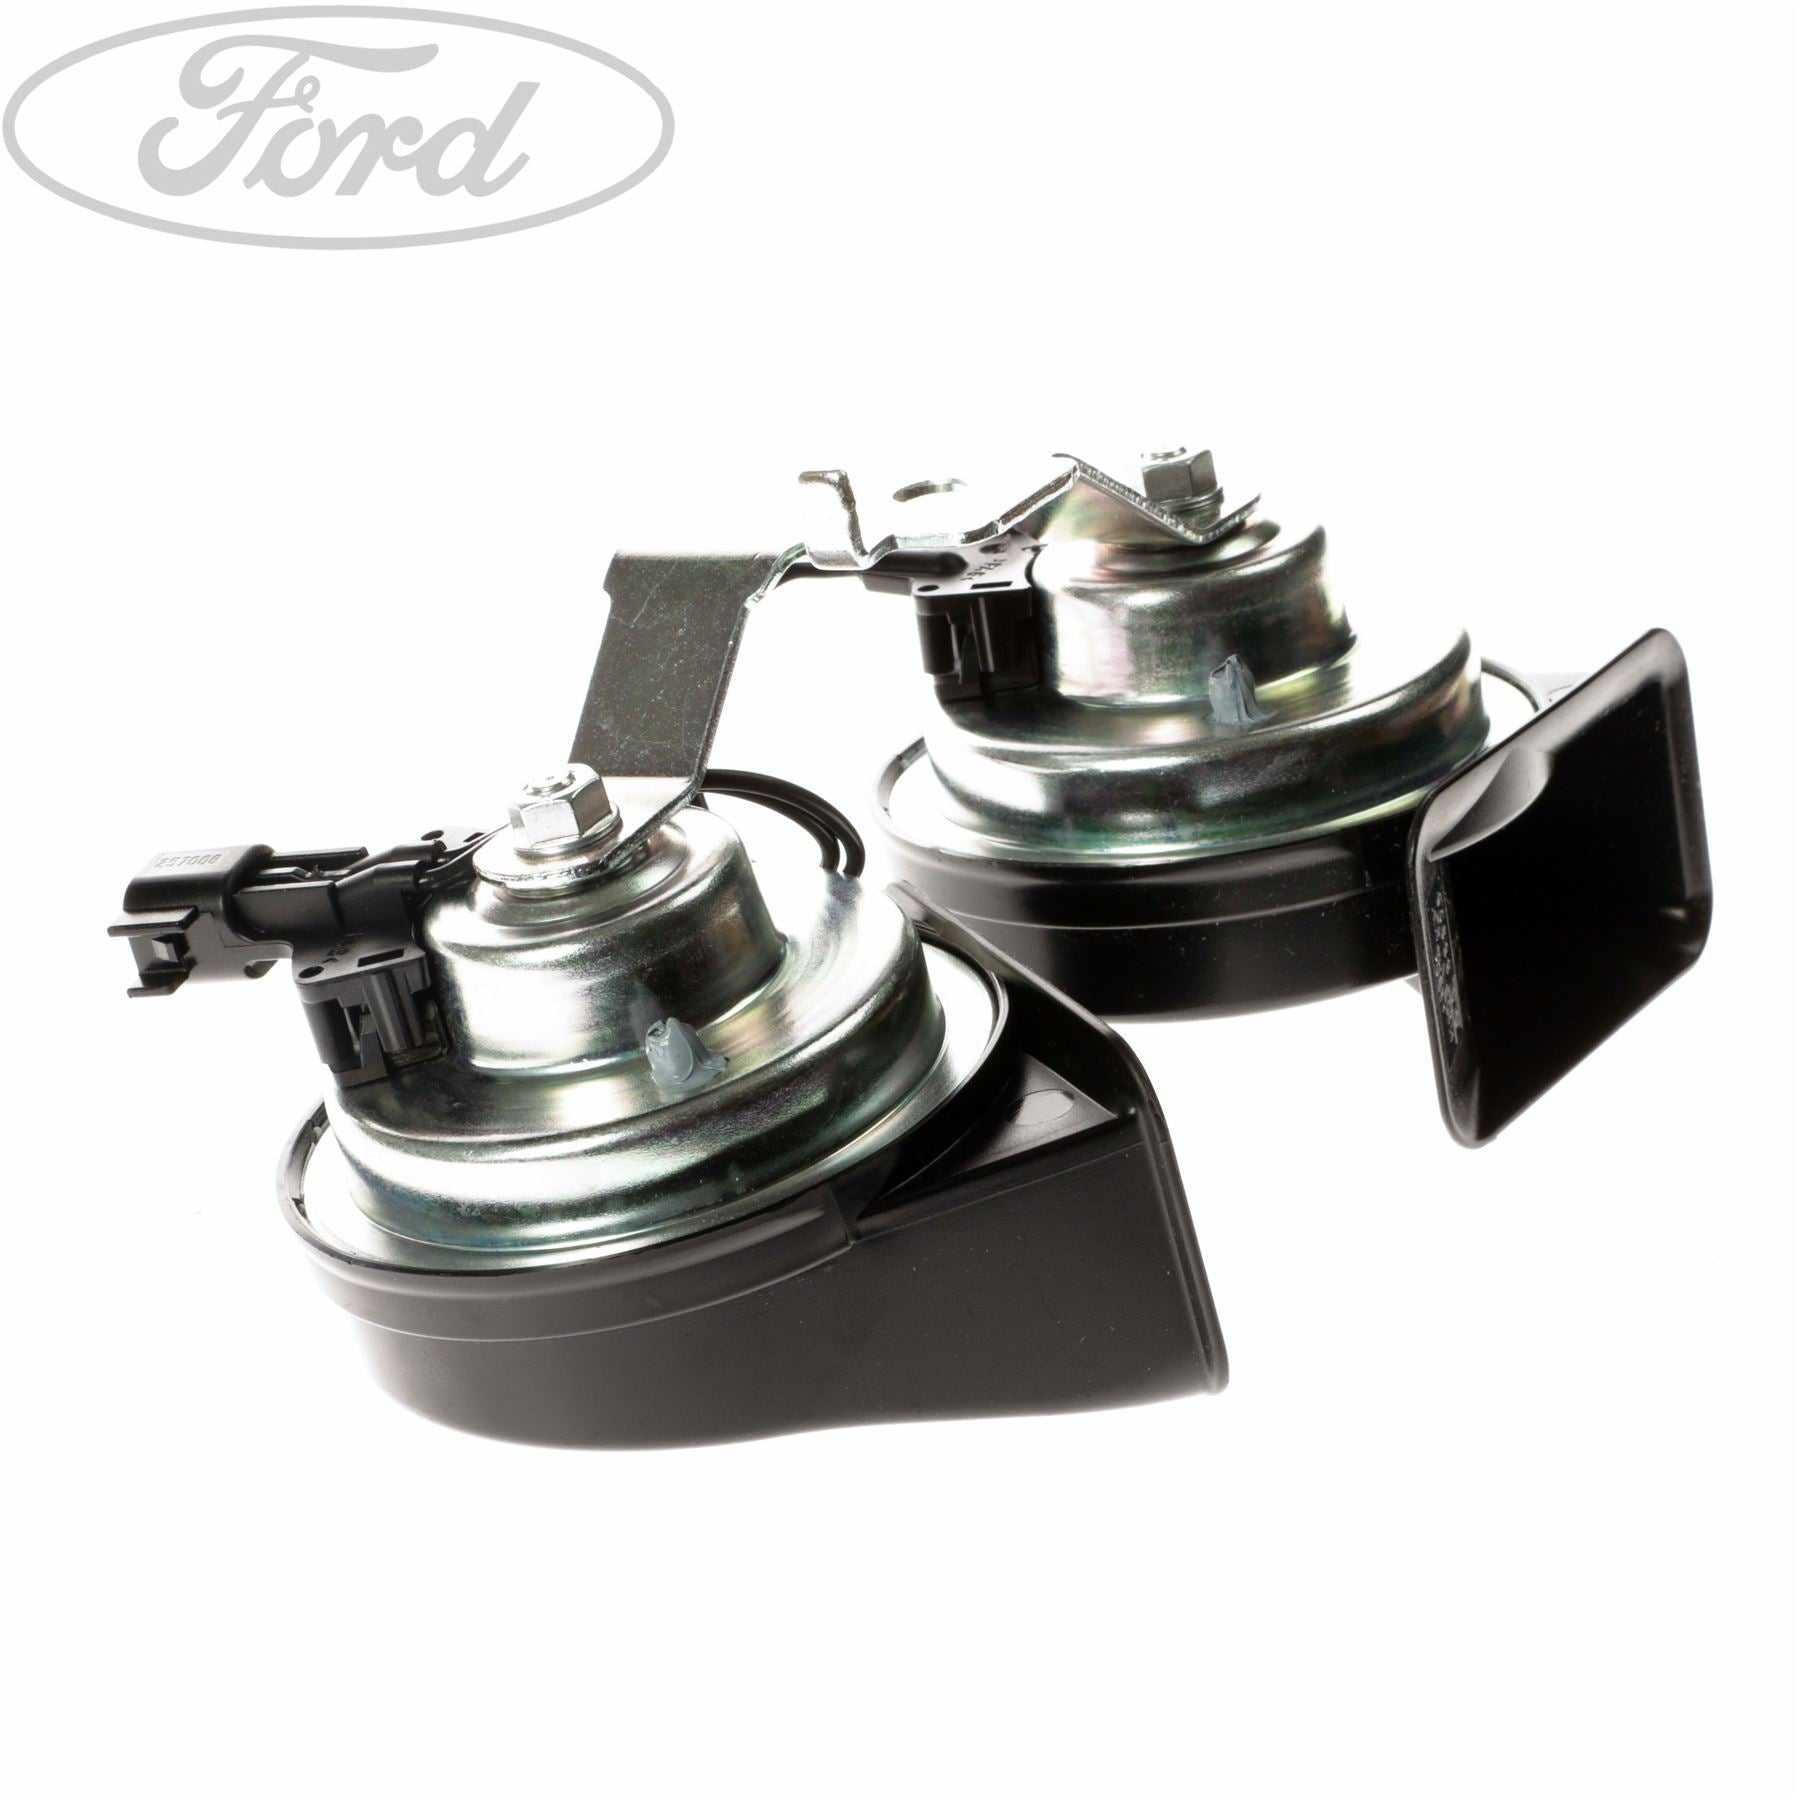 Ford, TRANSIT CAR HORN